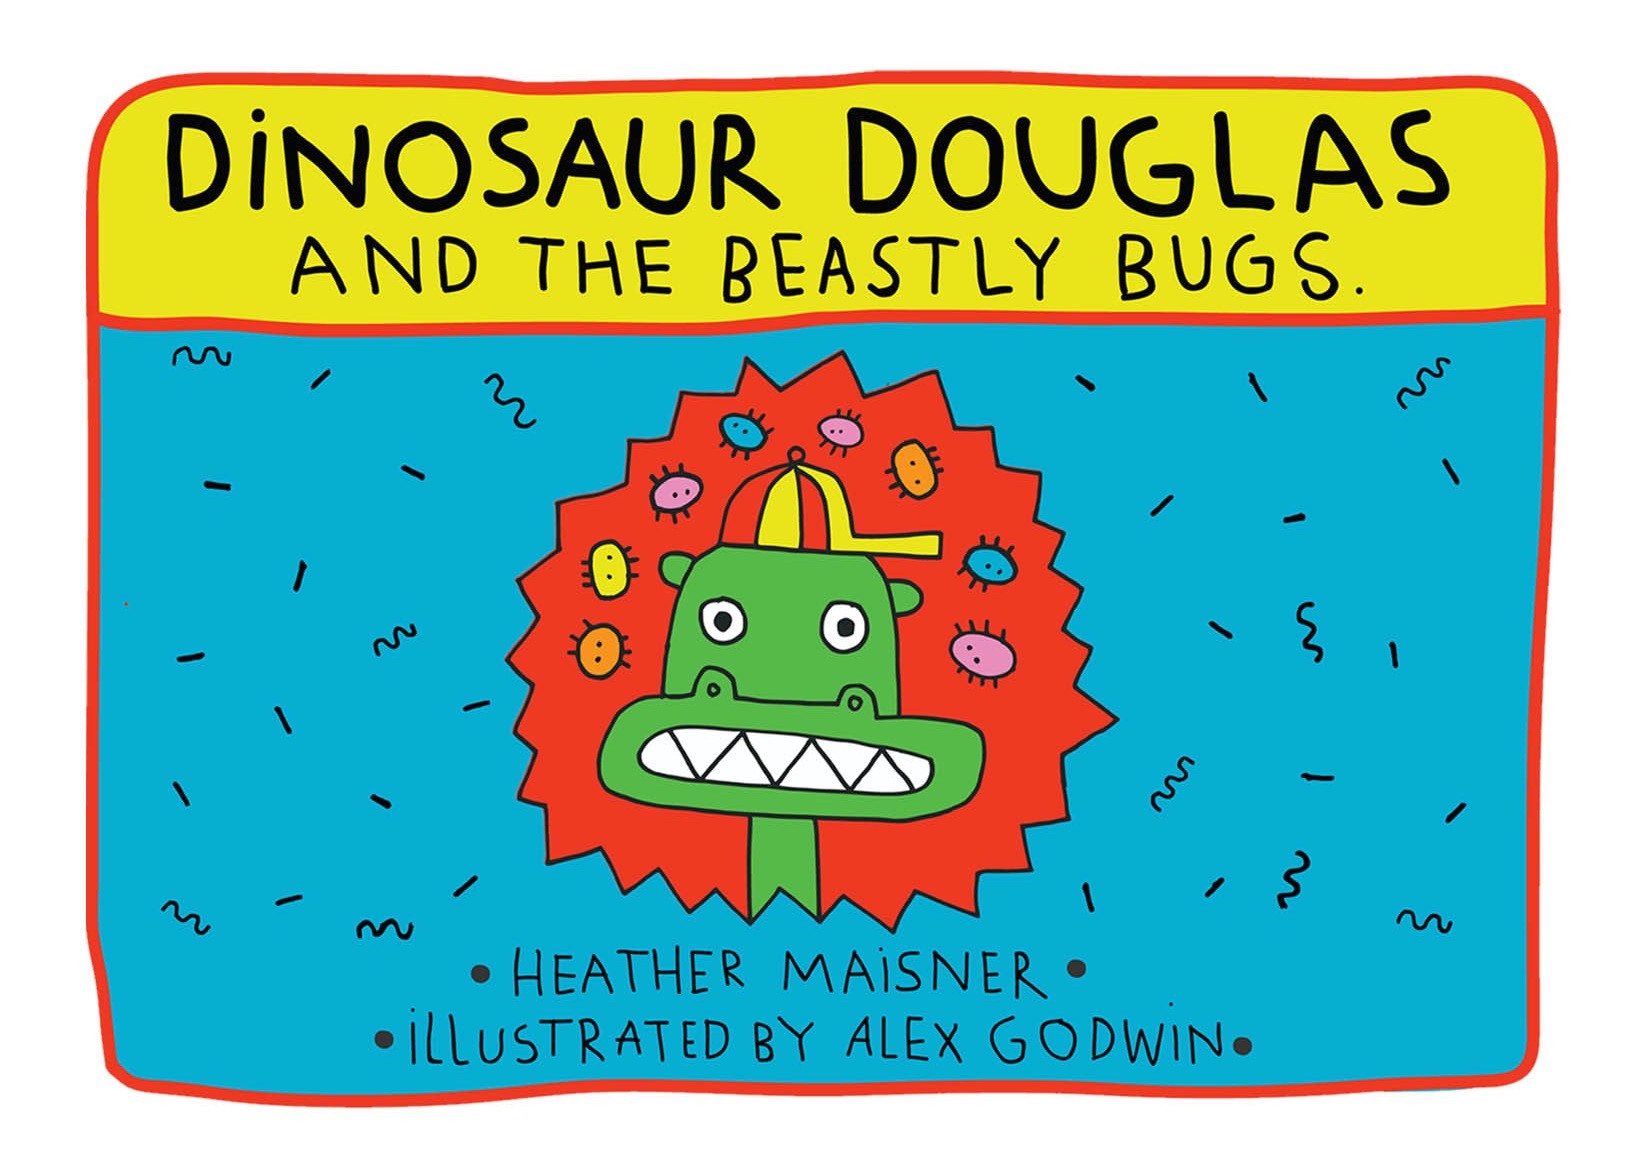 Dinosaur Douglas and the Beastly Bugs